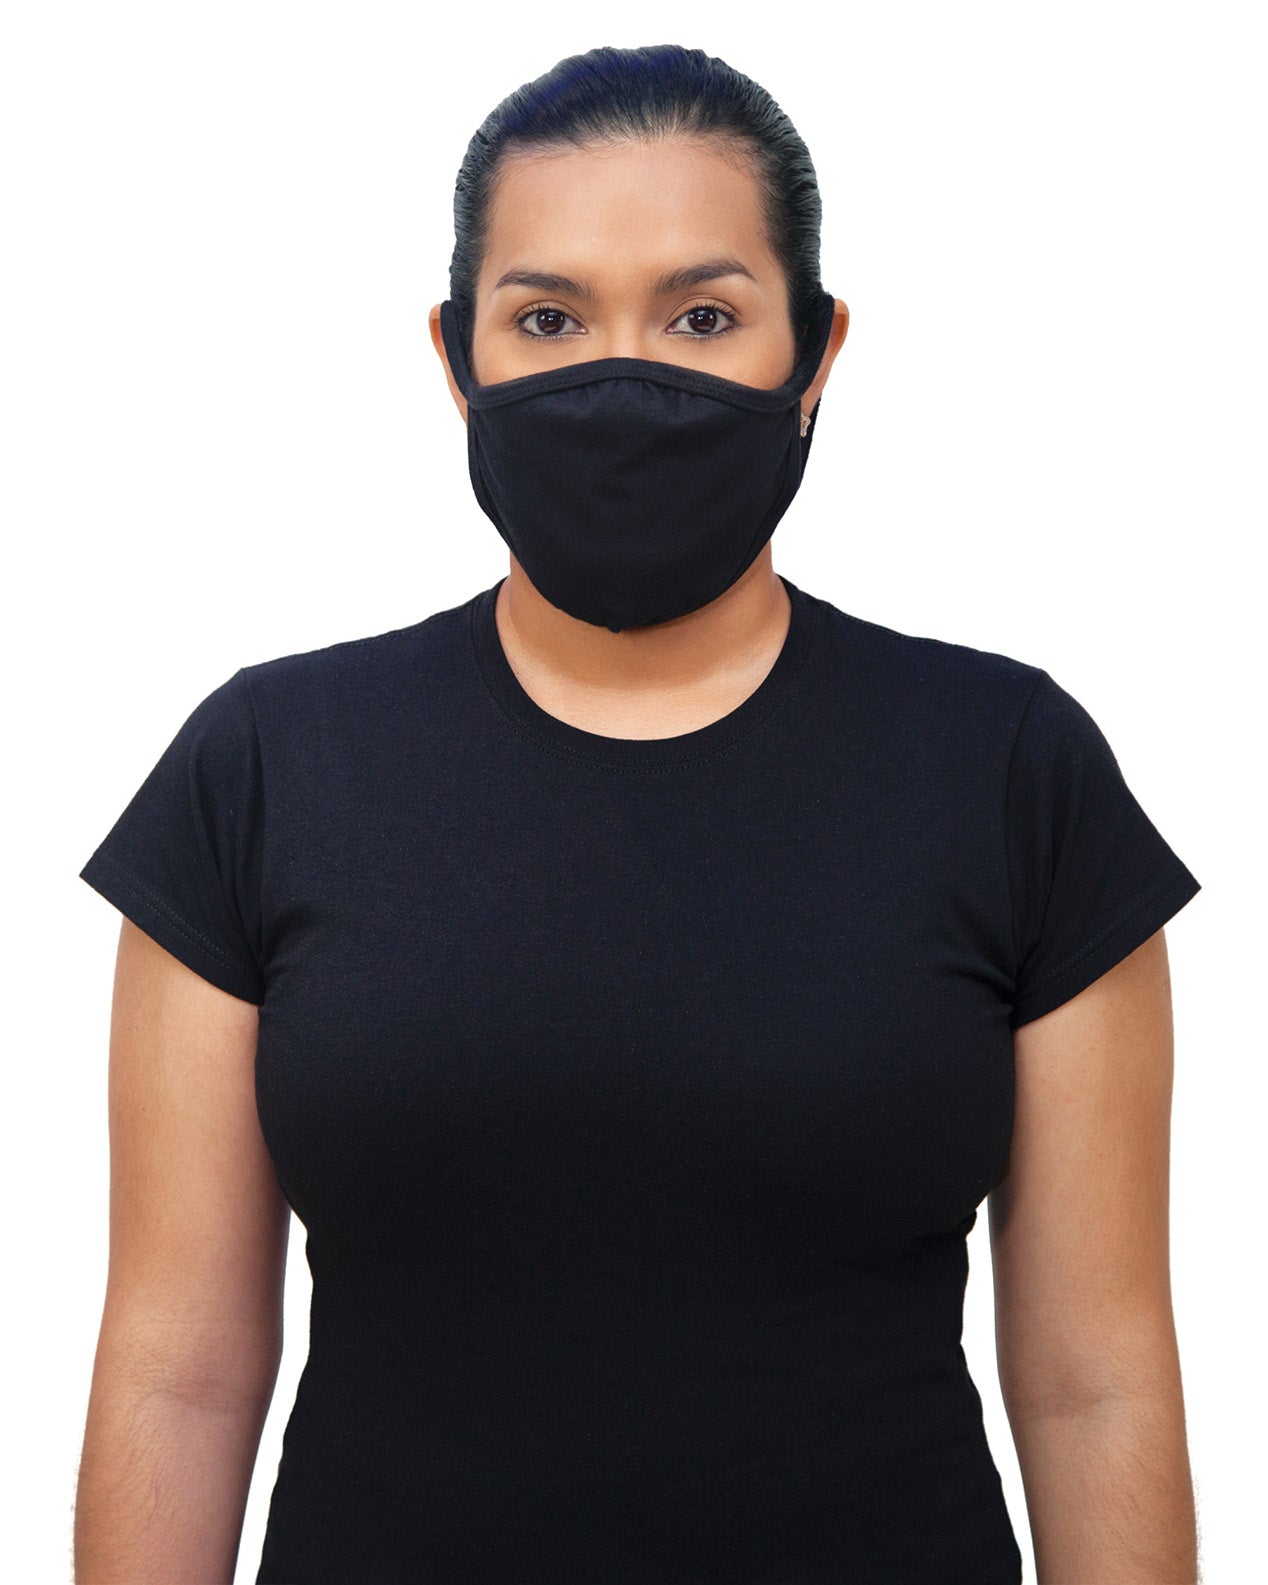 Gildan Cotton Everyday Mask - Adult, Black